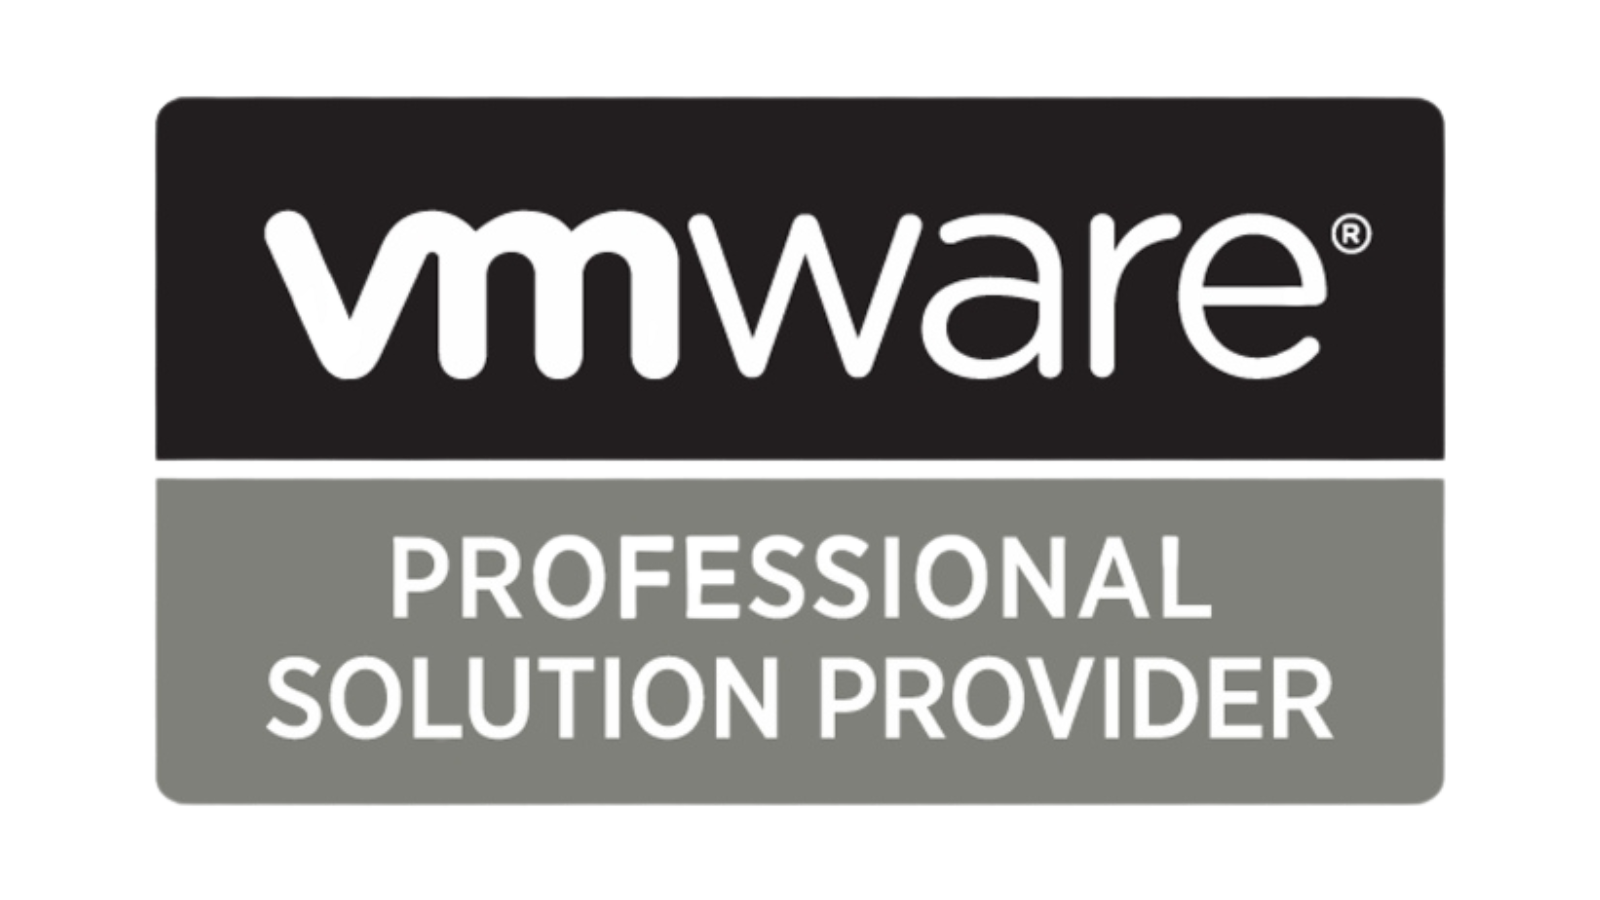 VMWARE Professional Solution Provider